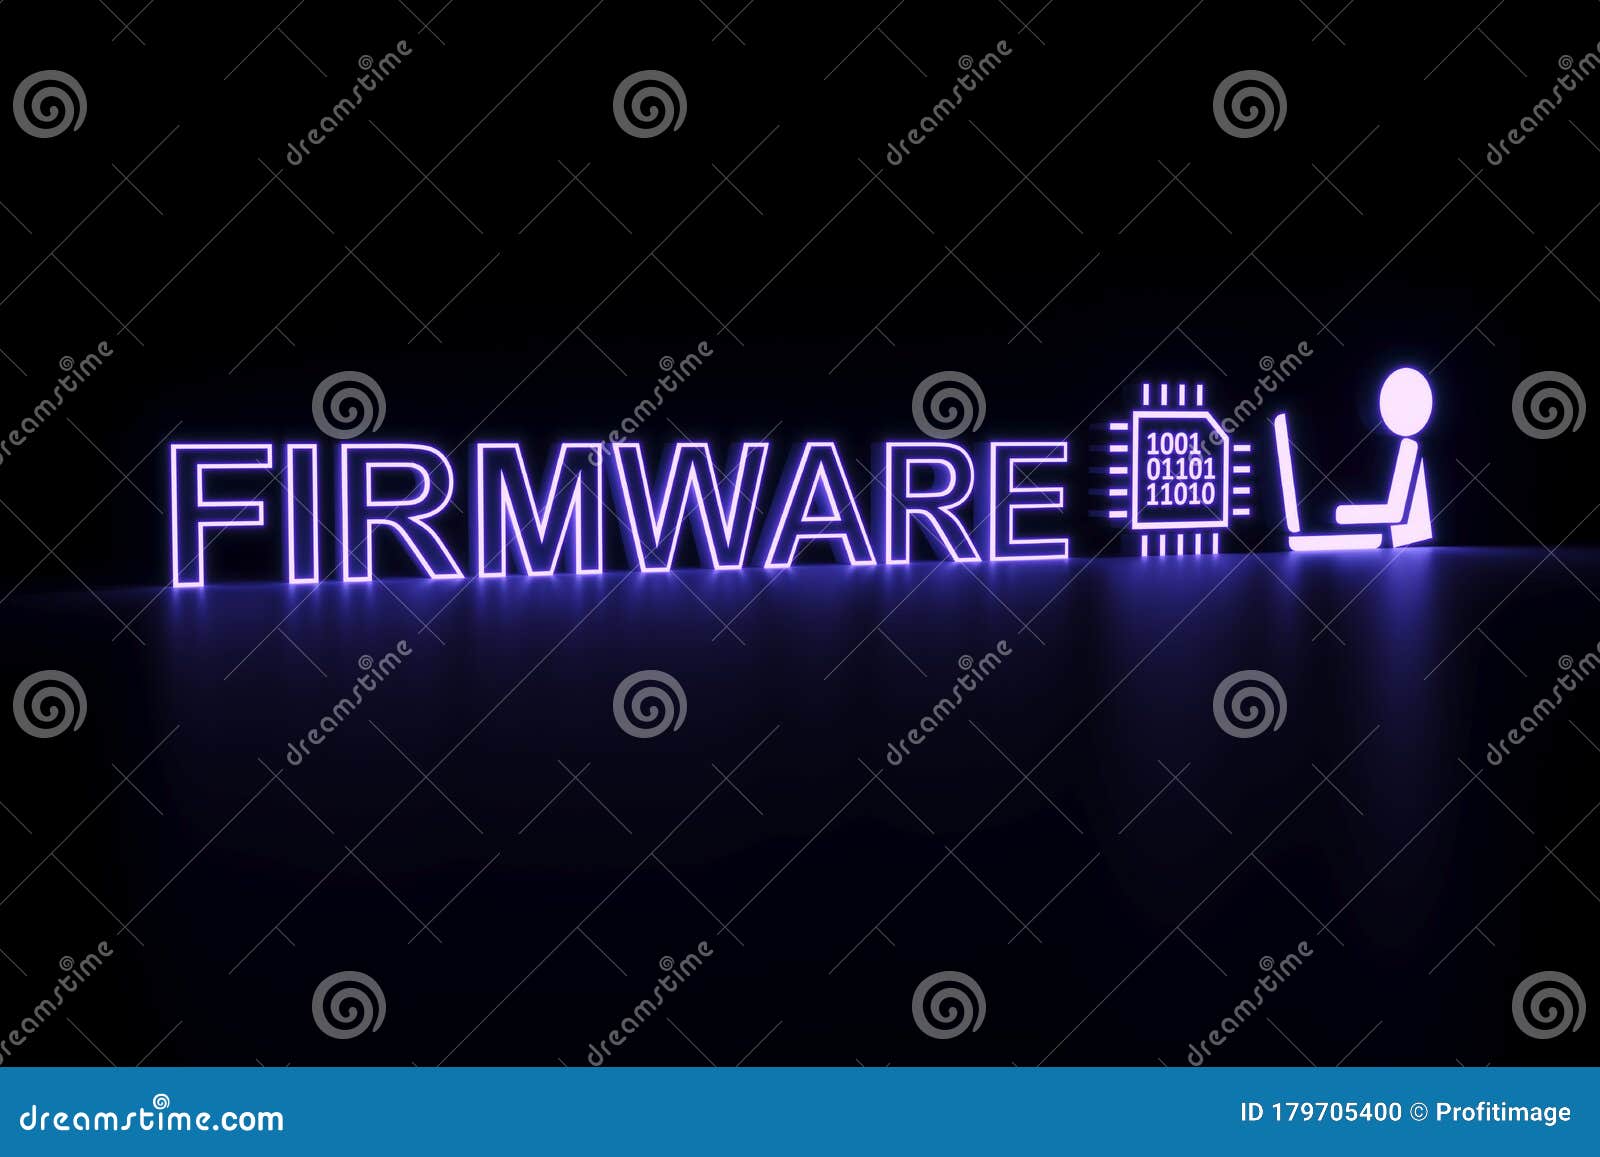 firmware neon concept self illumination background